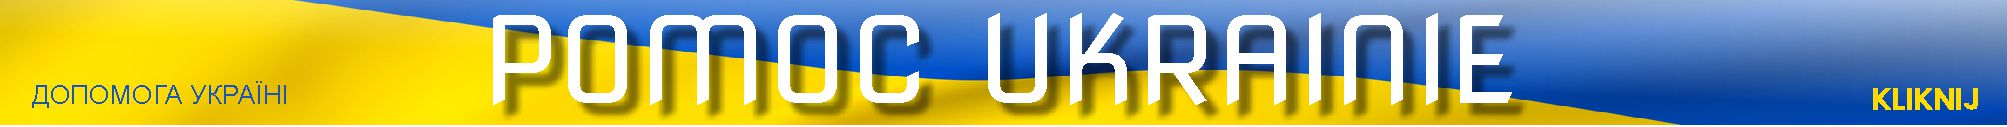 banerek ukraina site3